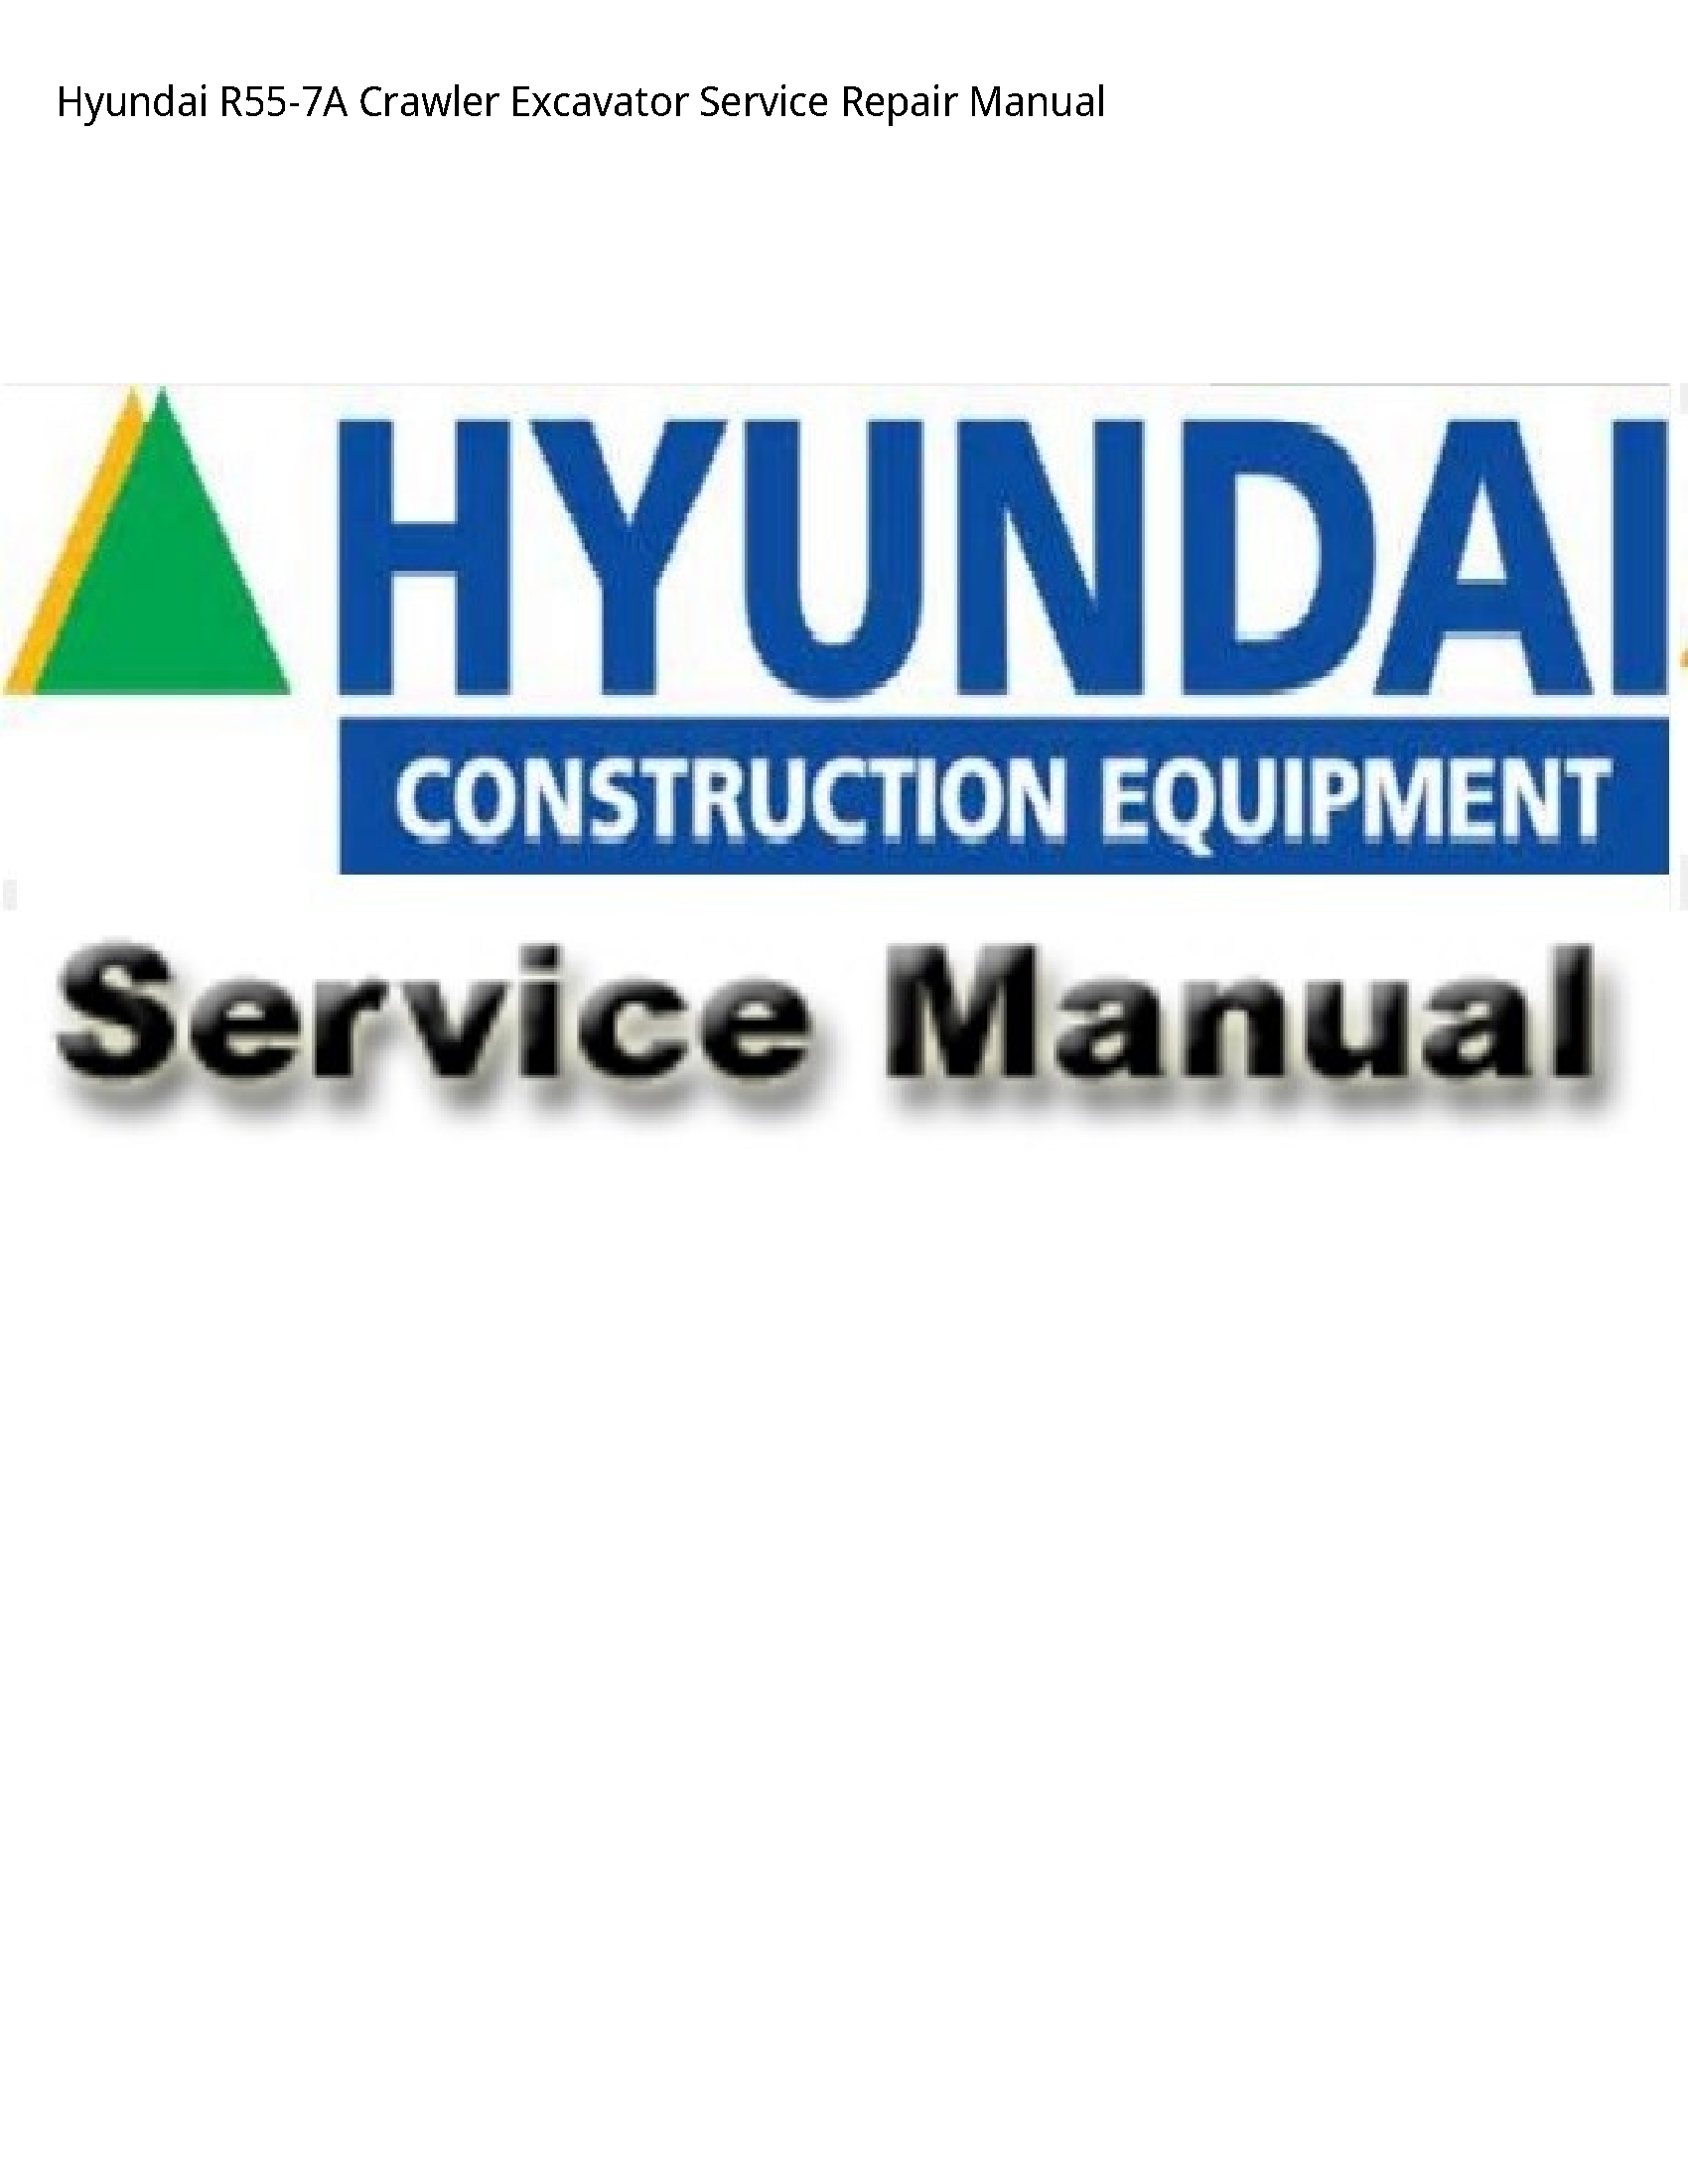 Hyundai R55-7A Crawler Excavator manual